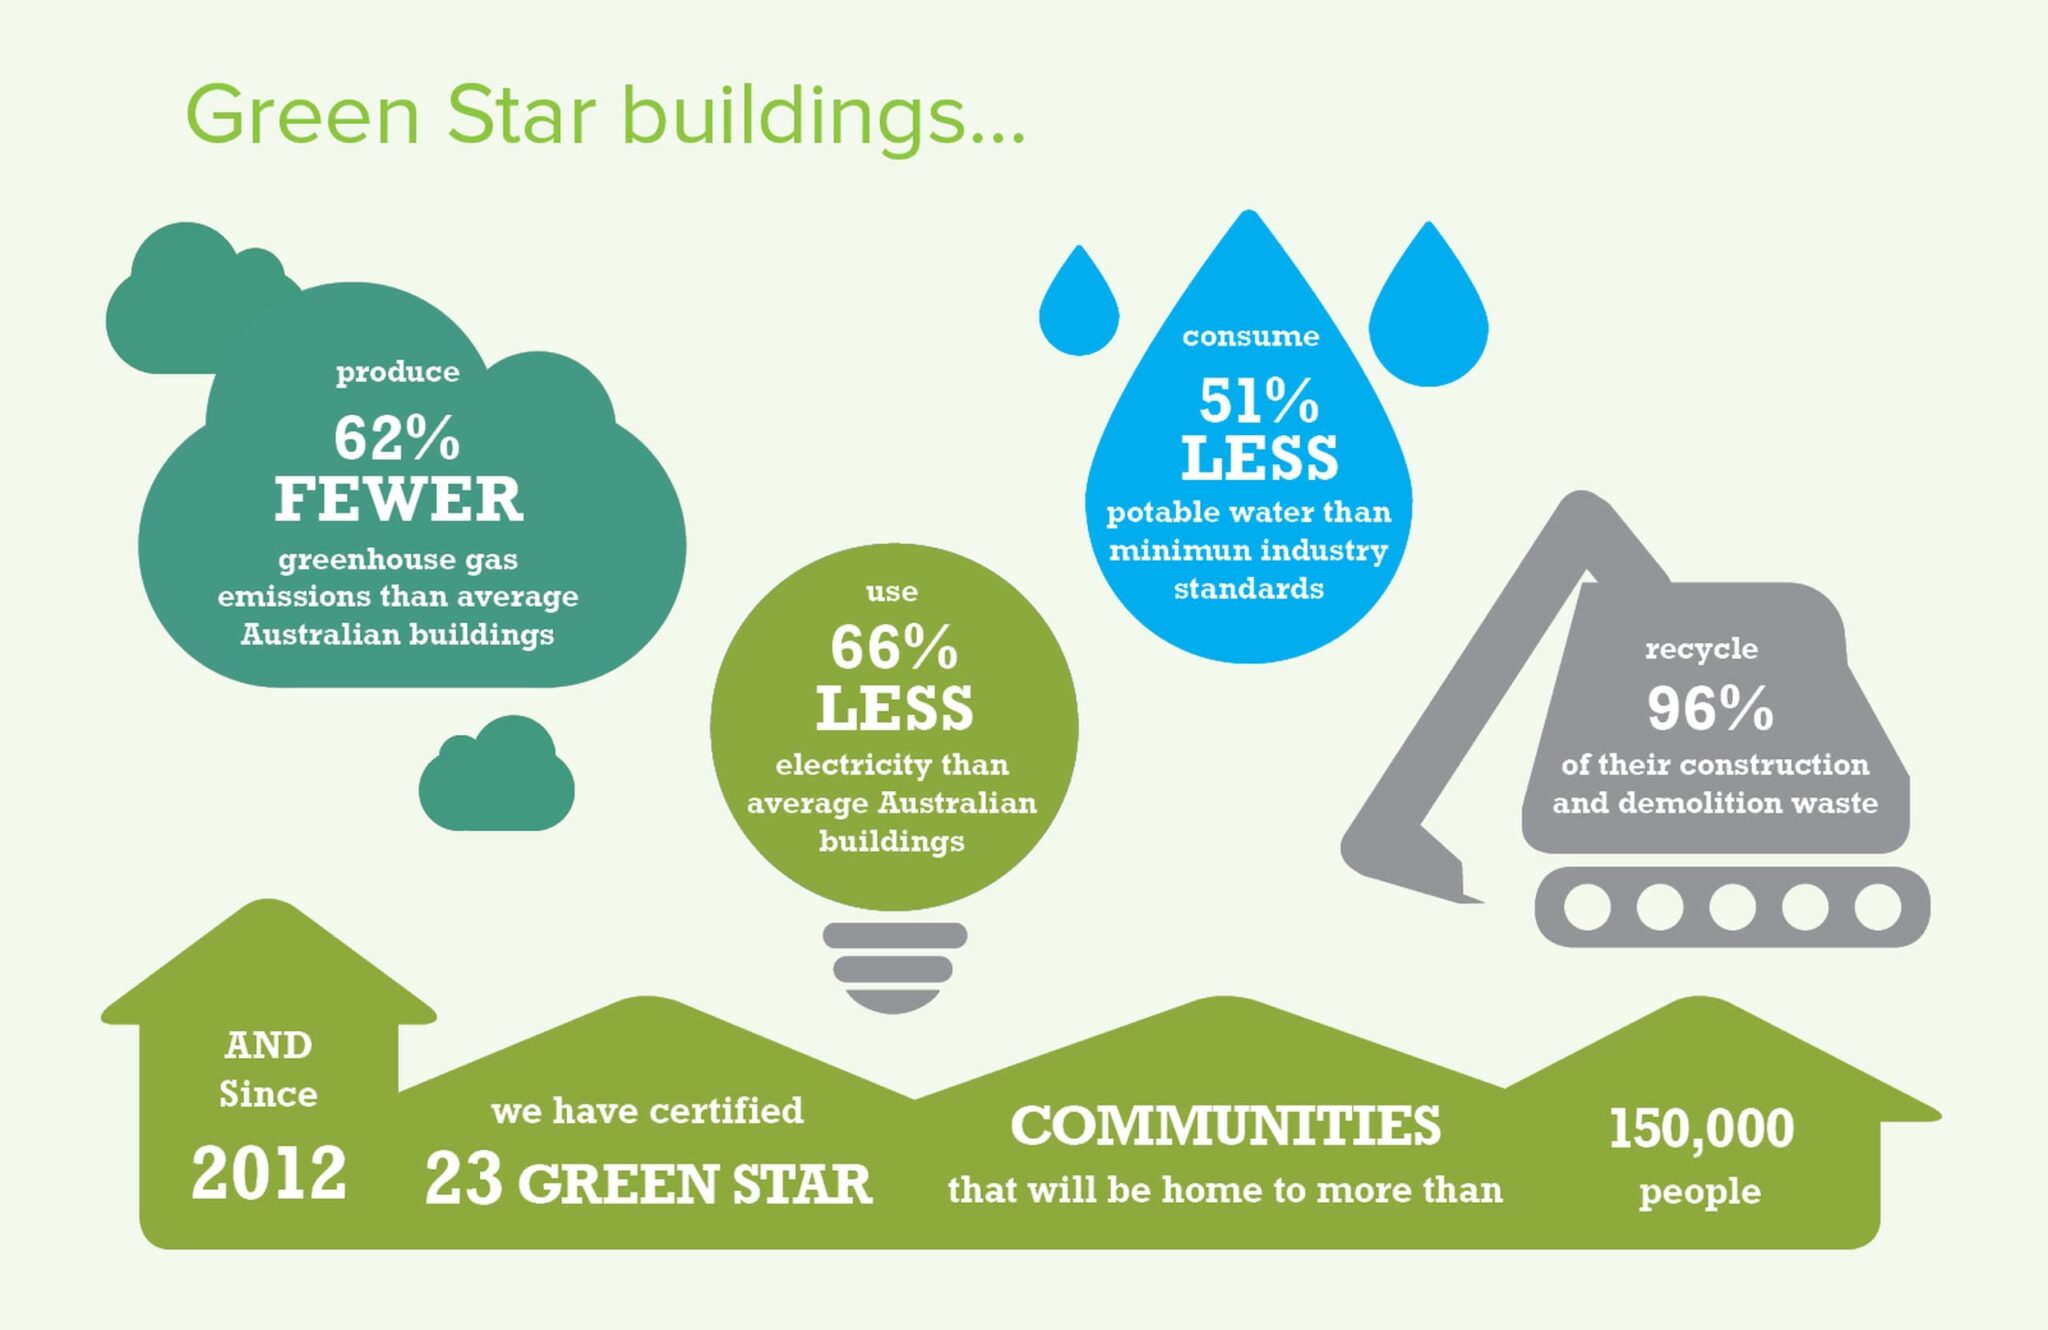 Green Building Council Australia